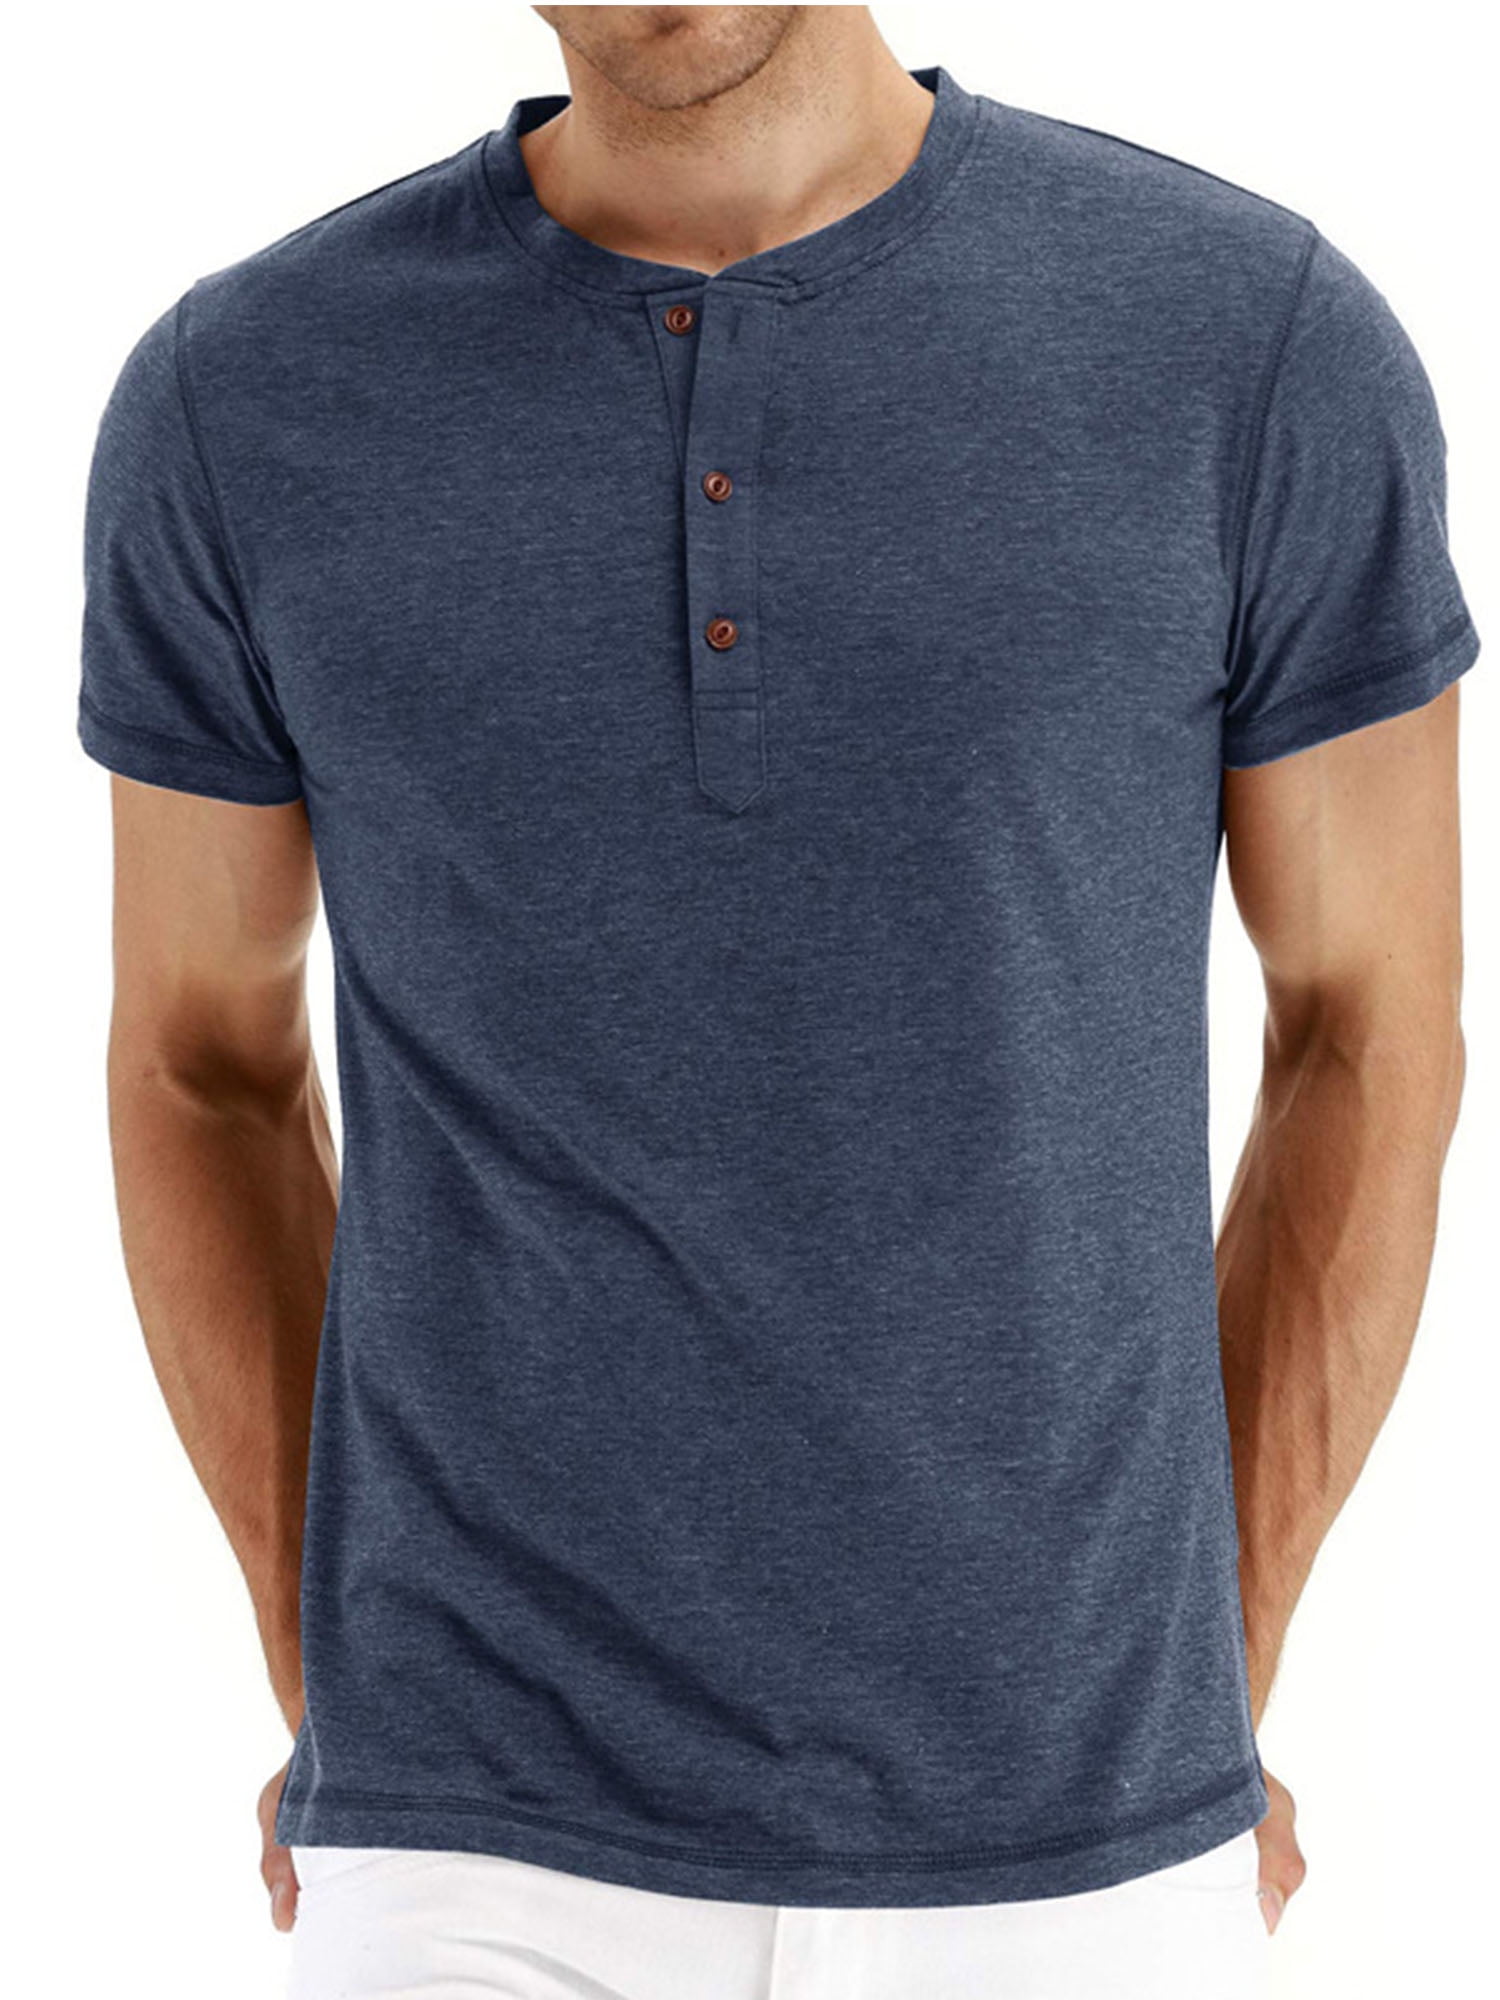 Mens Short Sleeve Button Henly V Neck Shirts Summer Comfy Tops 